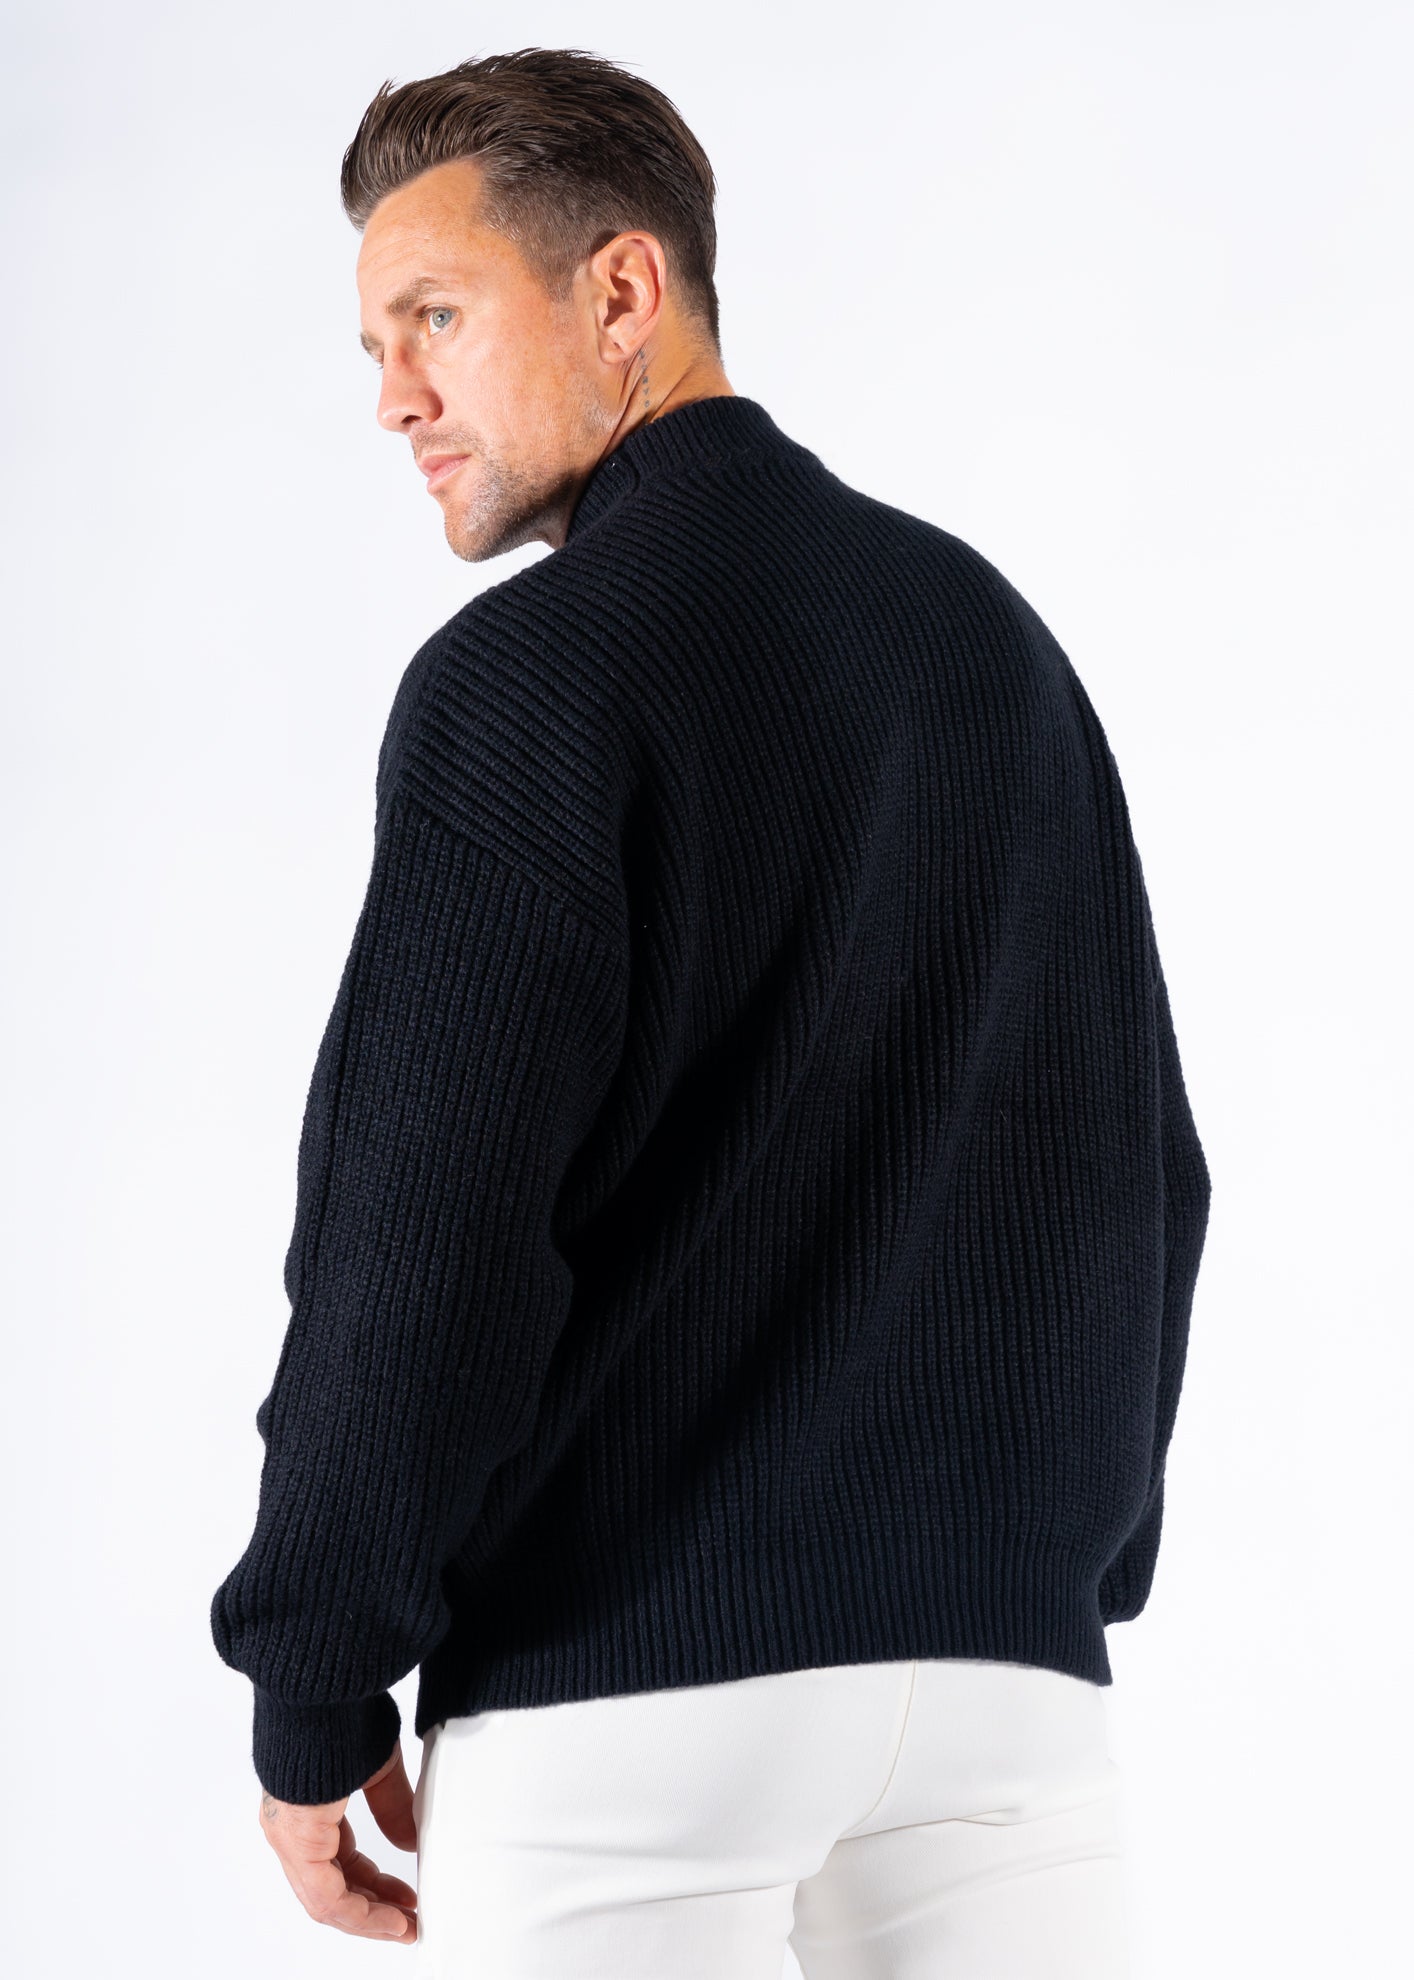 Sweater turtleneck knitted black oversized